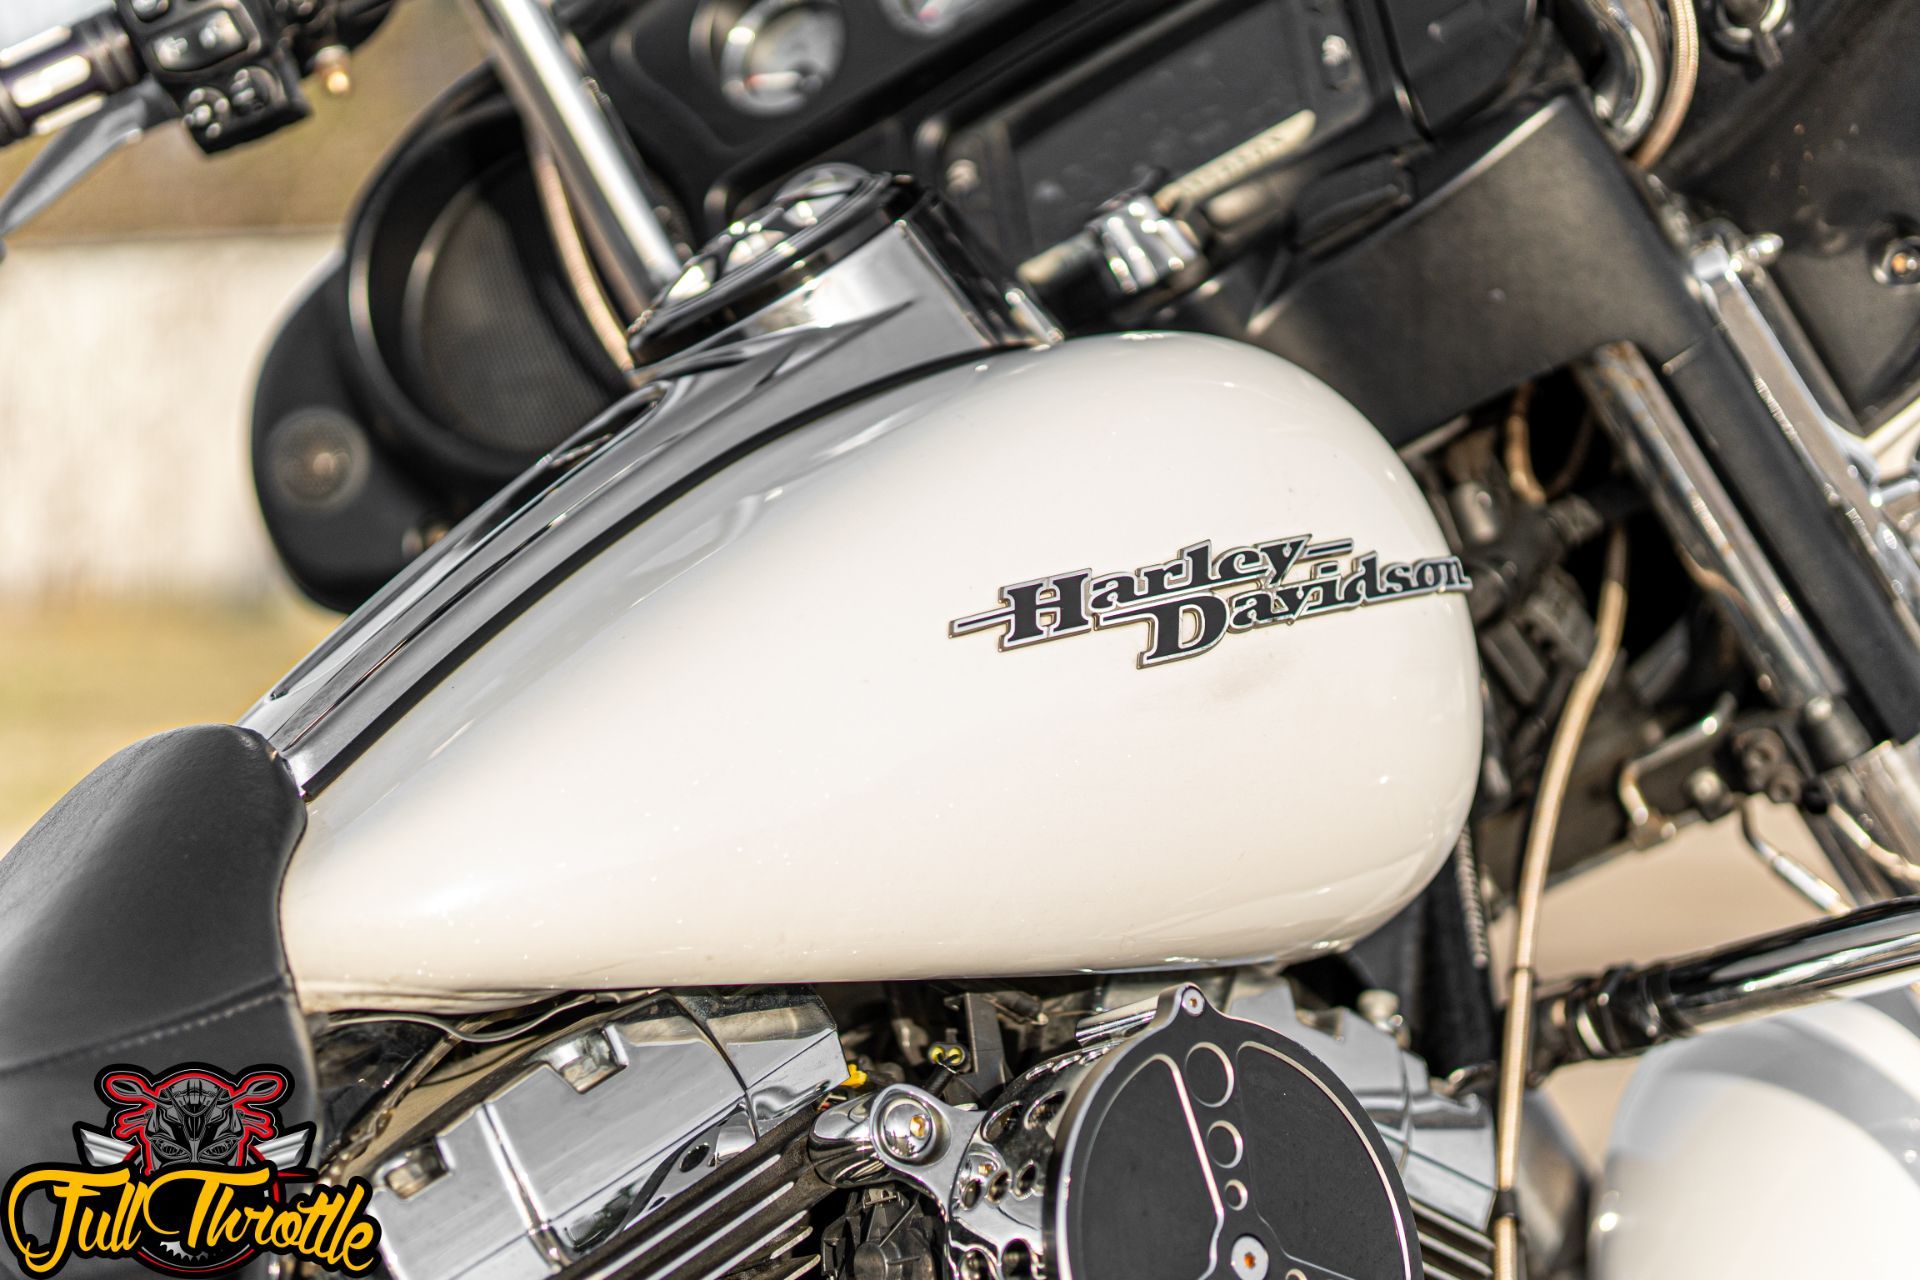 2016 Harley-Davidson Street Glide® in Lancaster, Texas - Photo 12